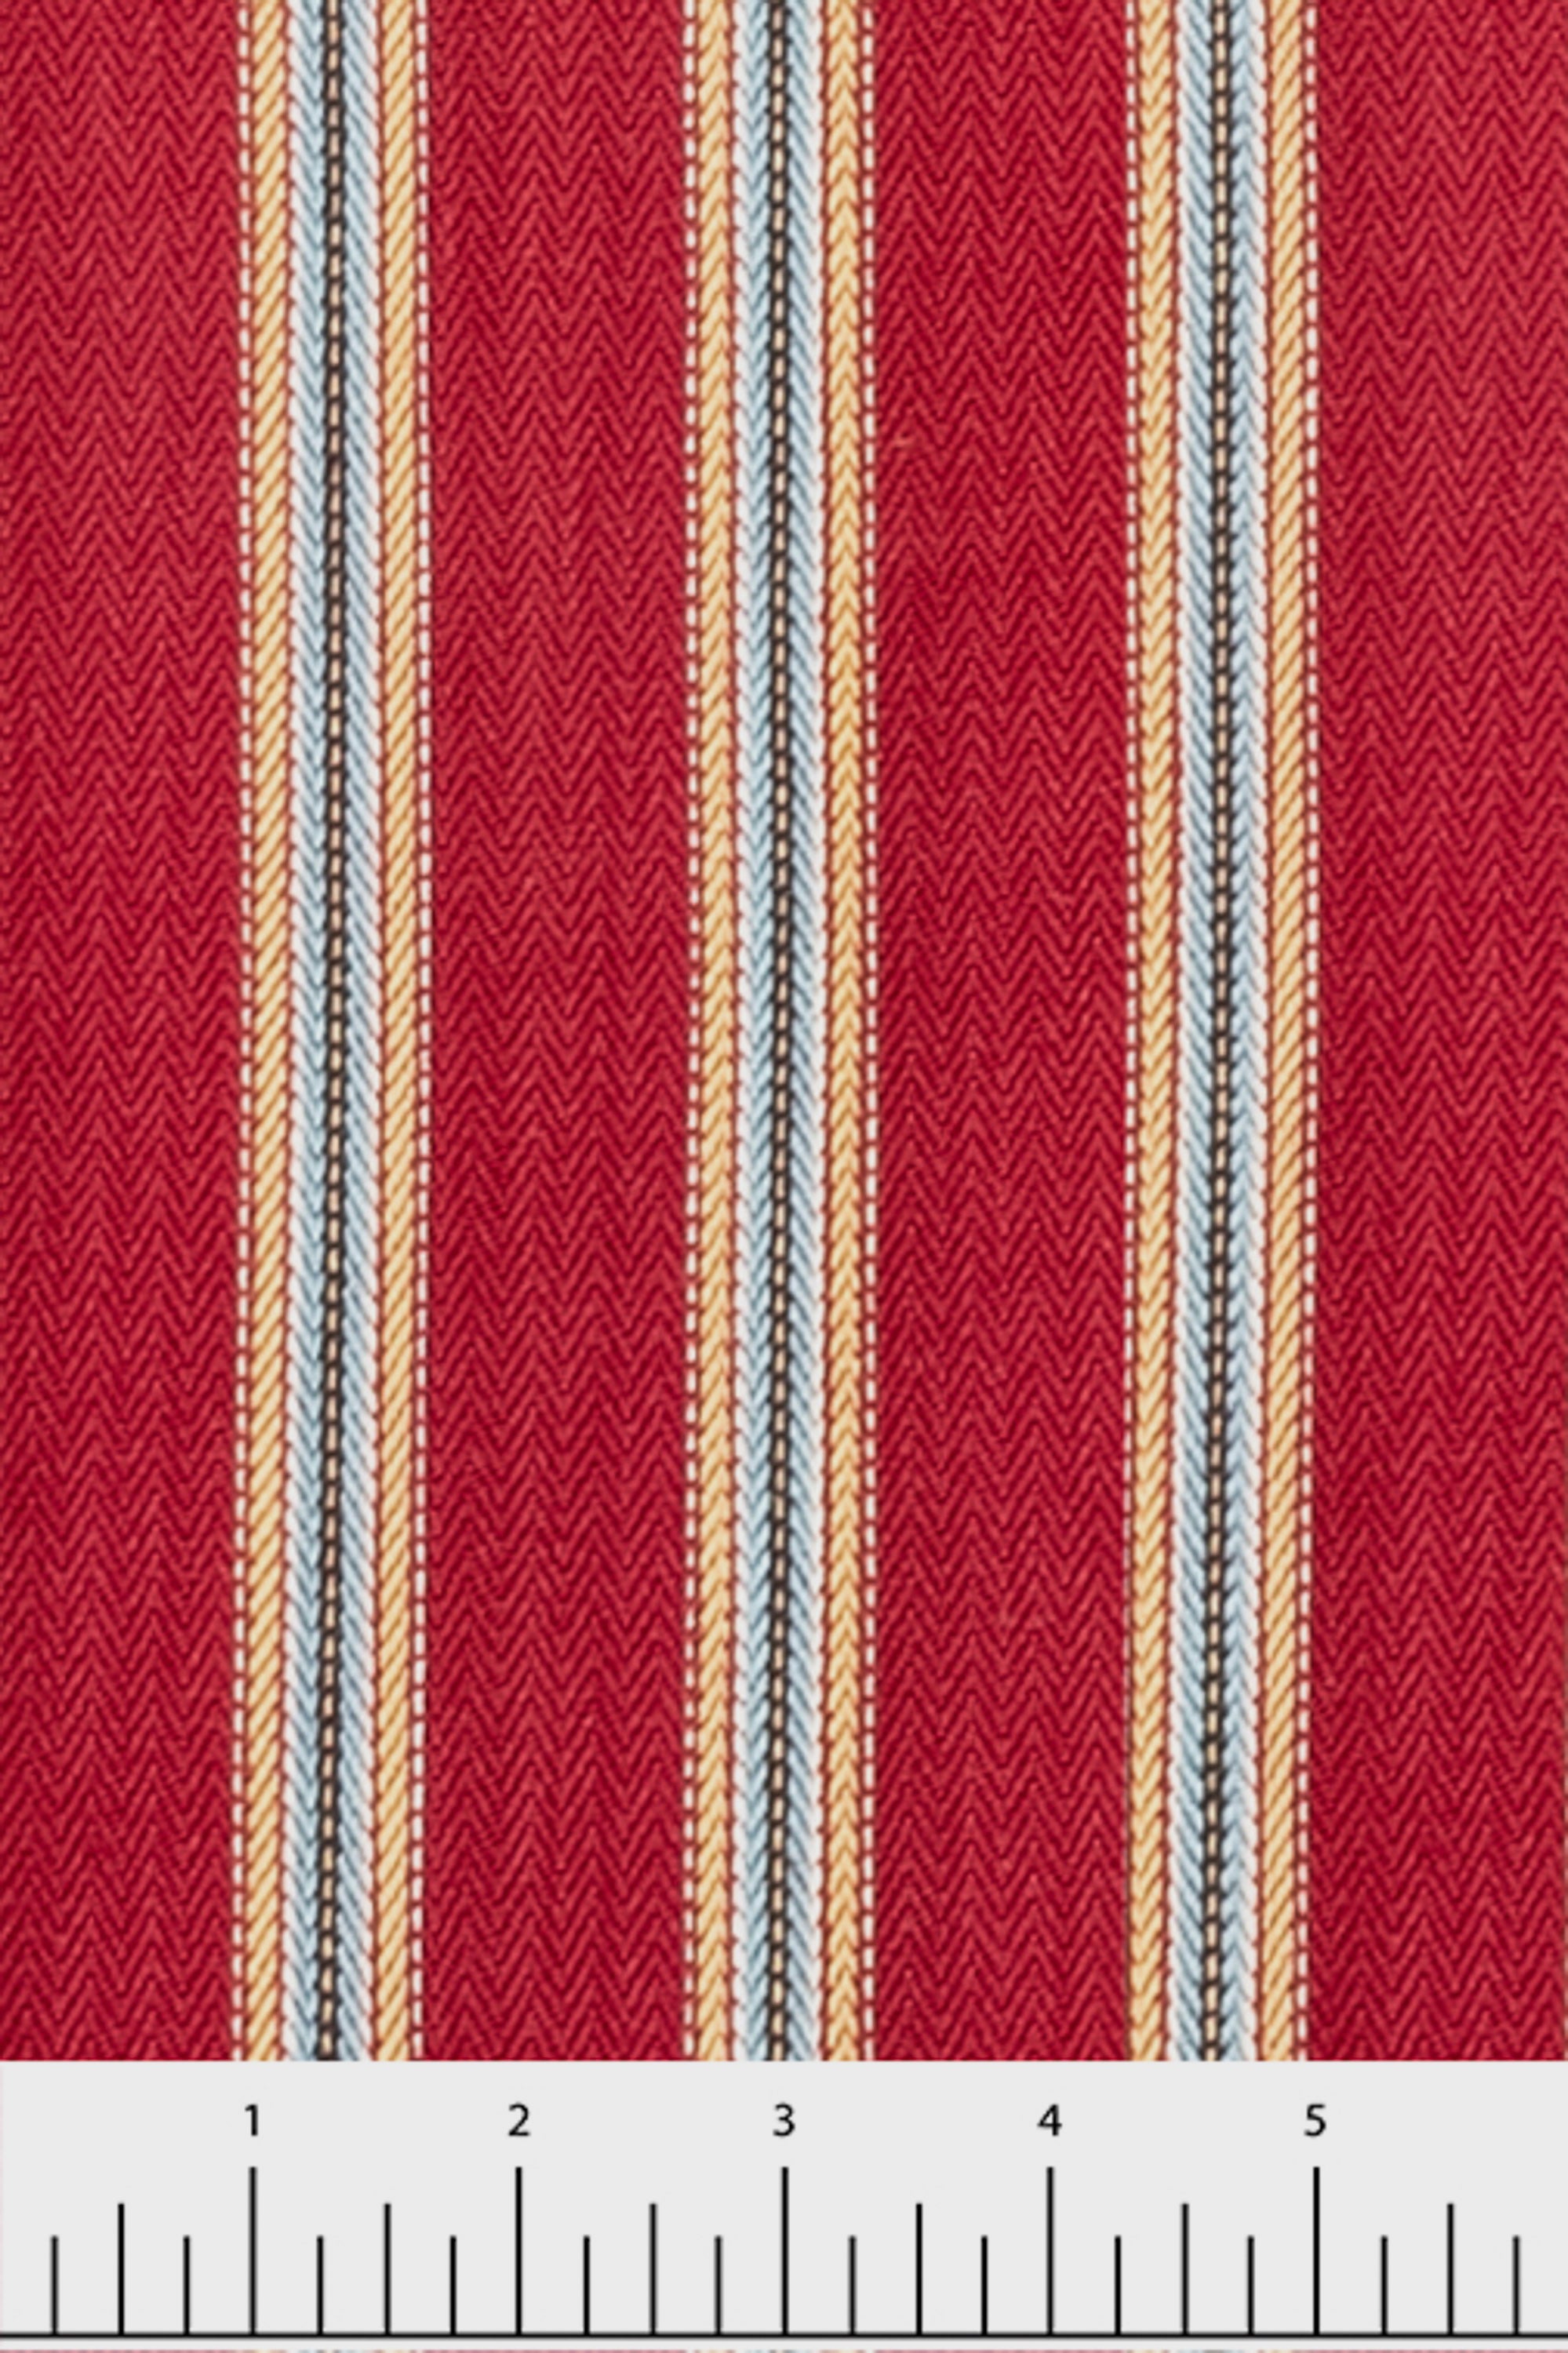 Fabric by the Yard, Stripe, Cheyenne Ranch Ticking, 117